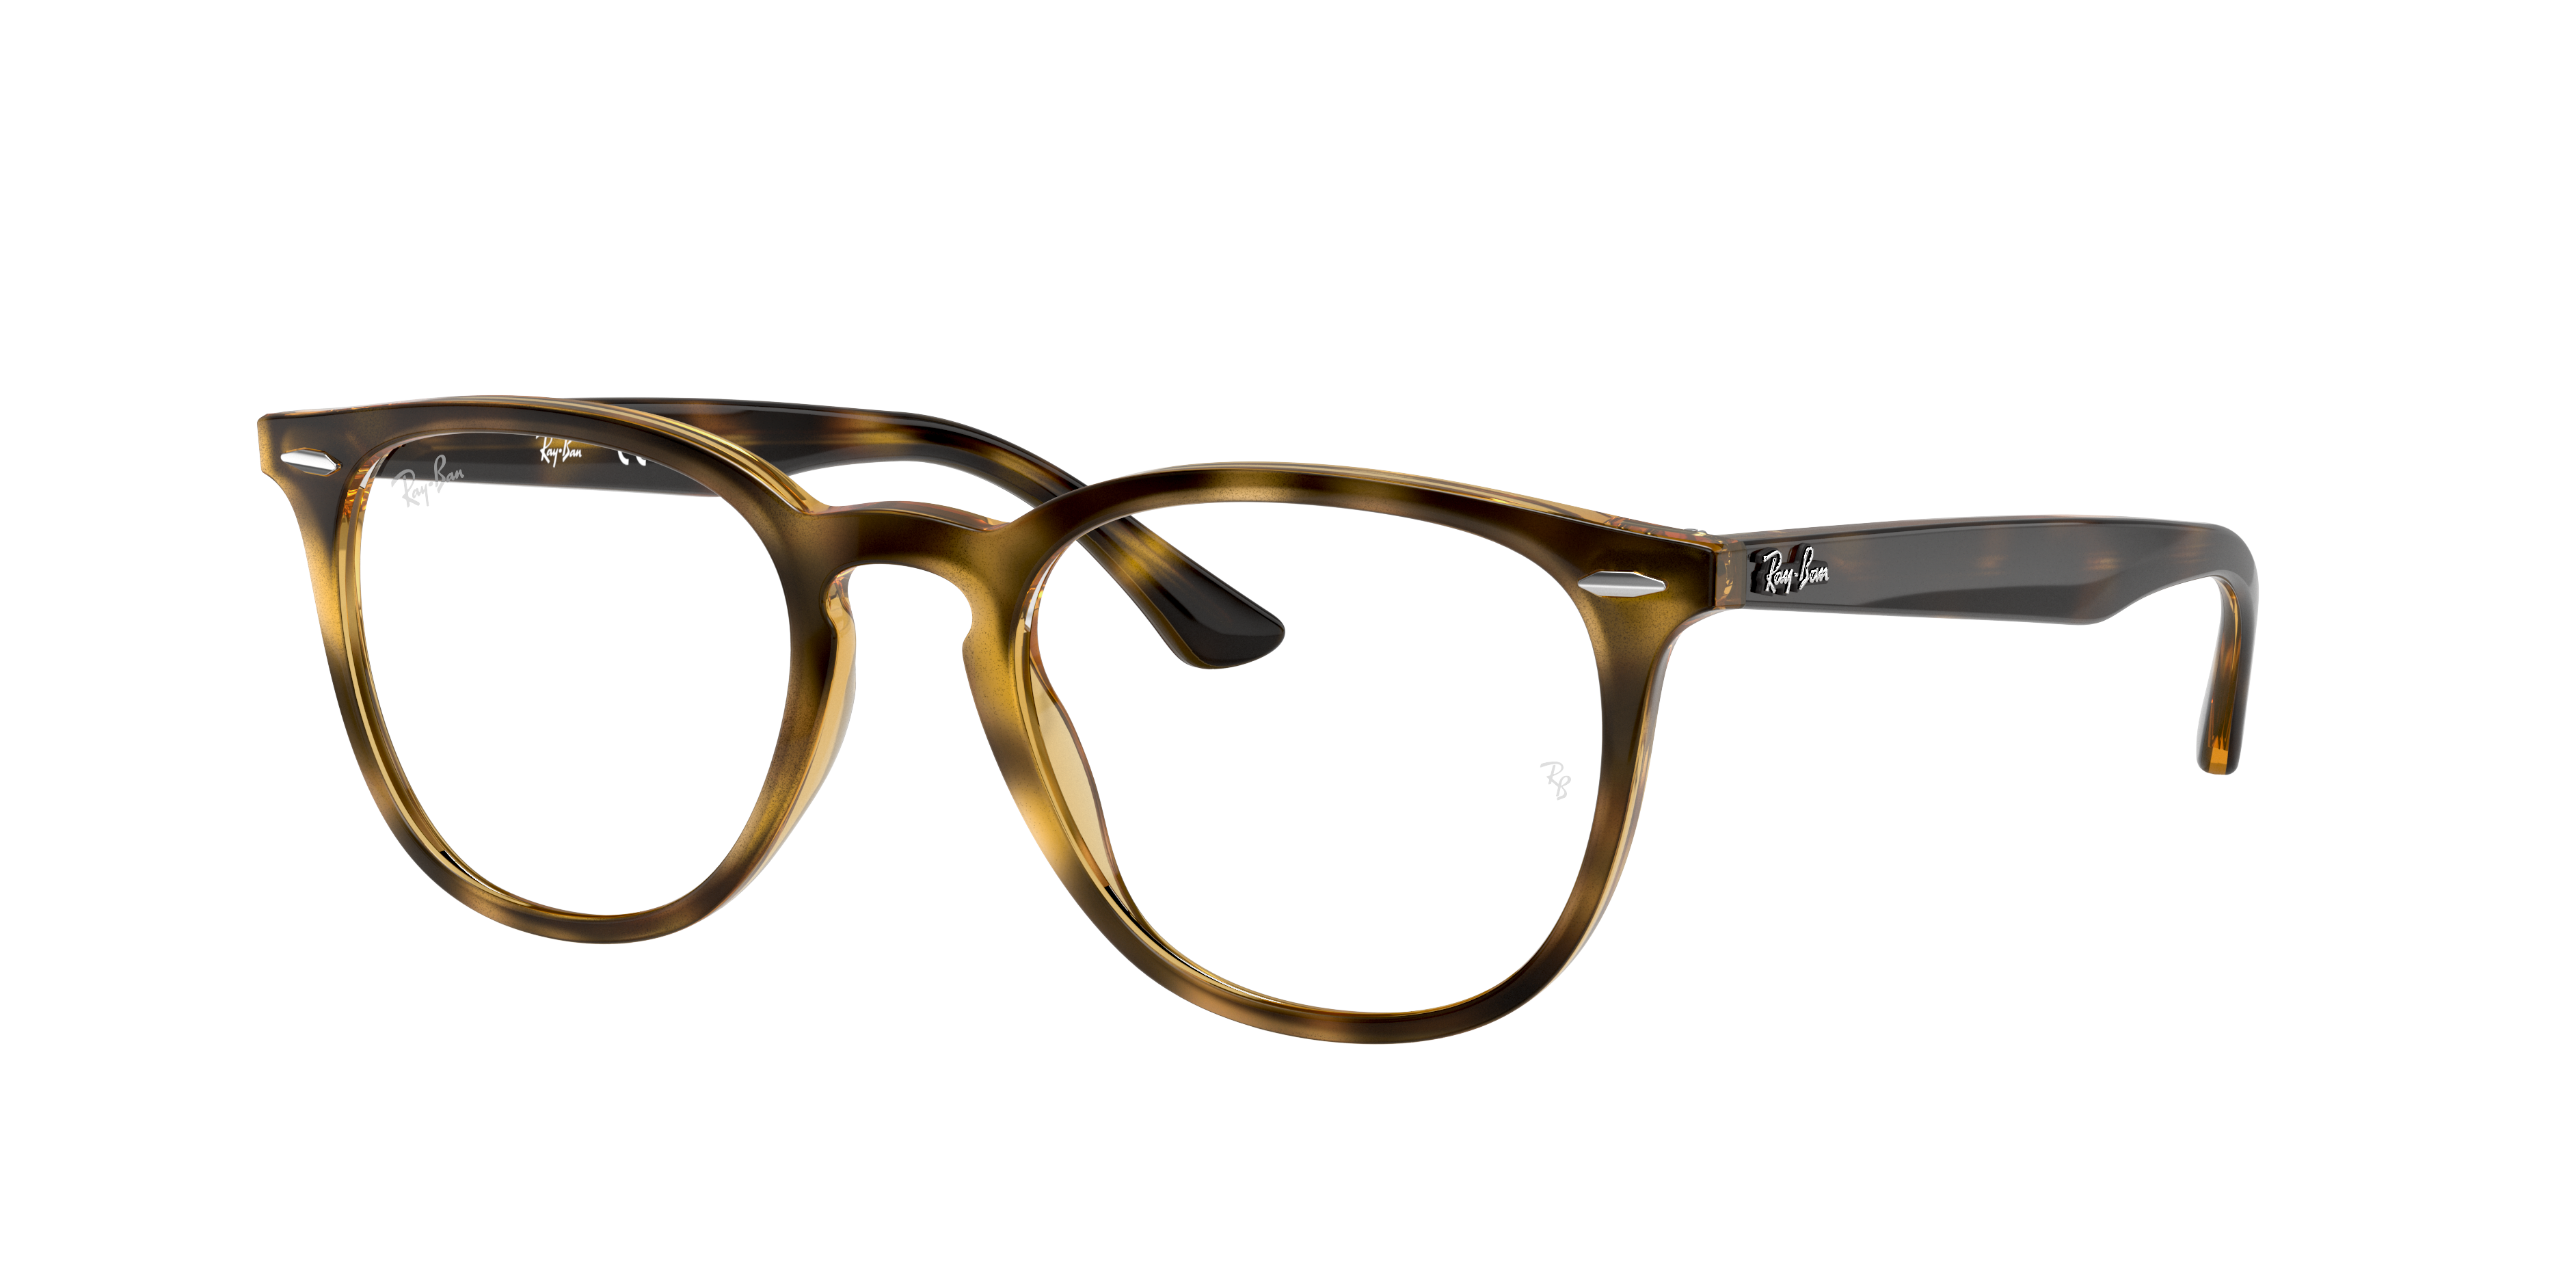 Rb7159 Optics Eyeglasses with Havana Frame | Ray-Ban®